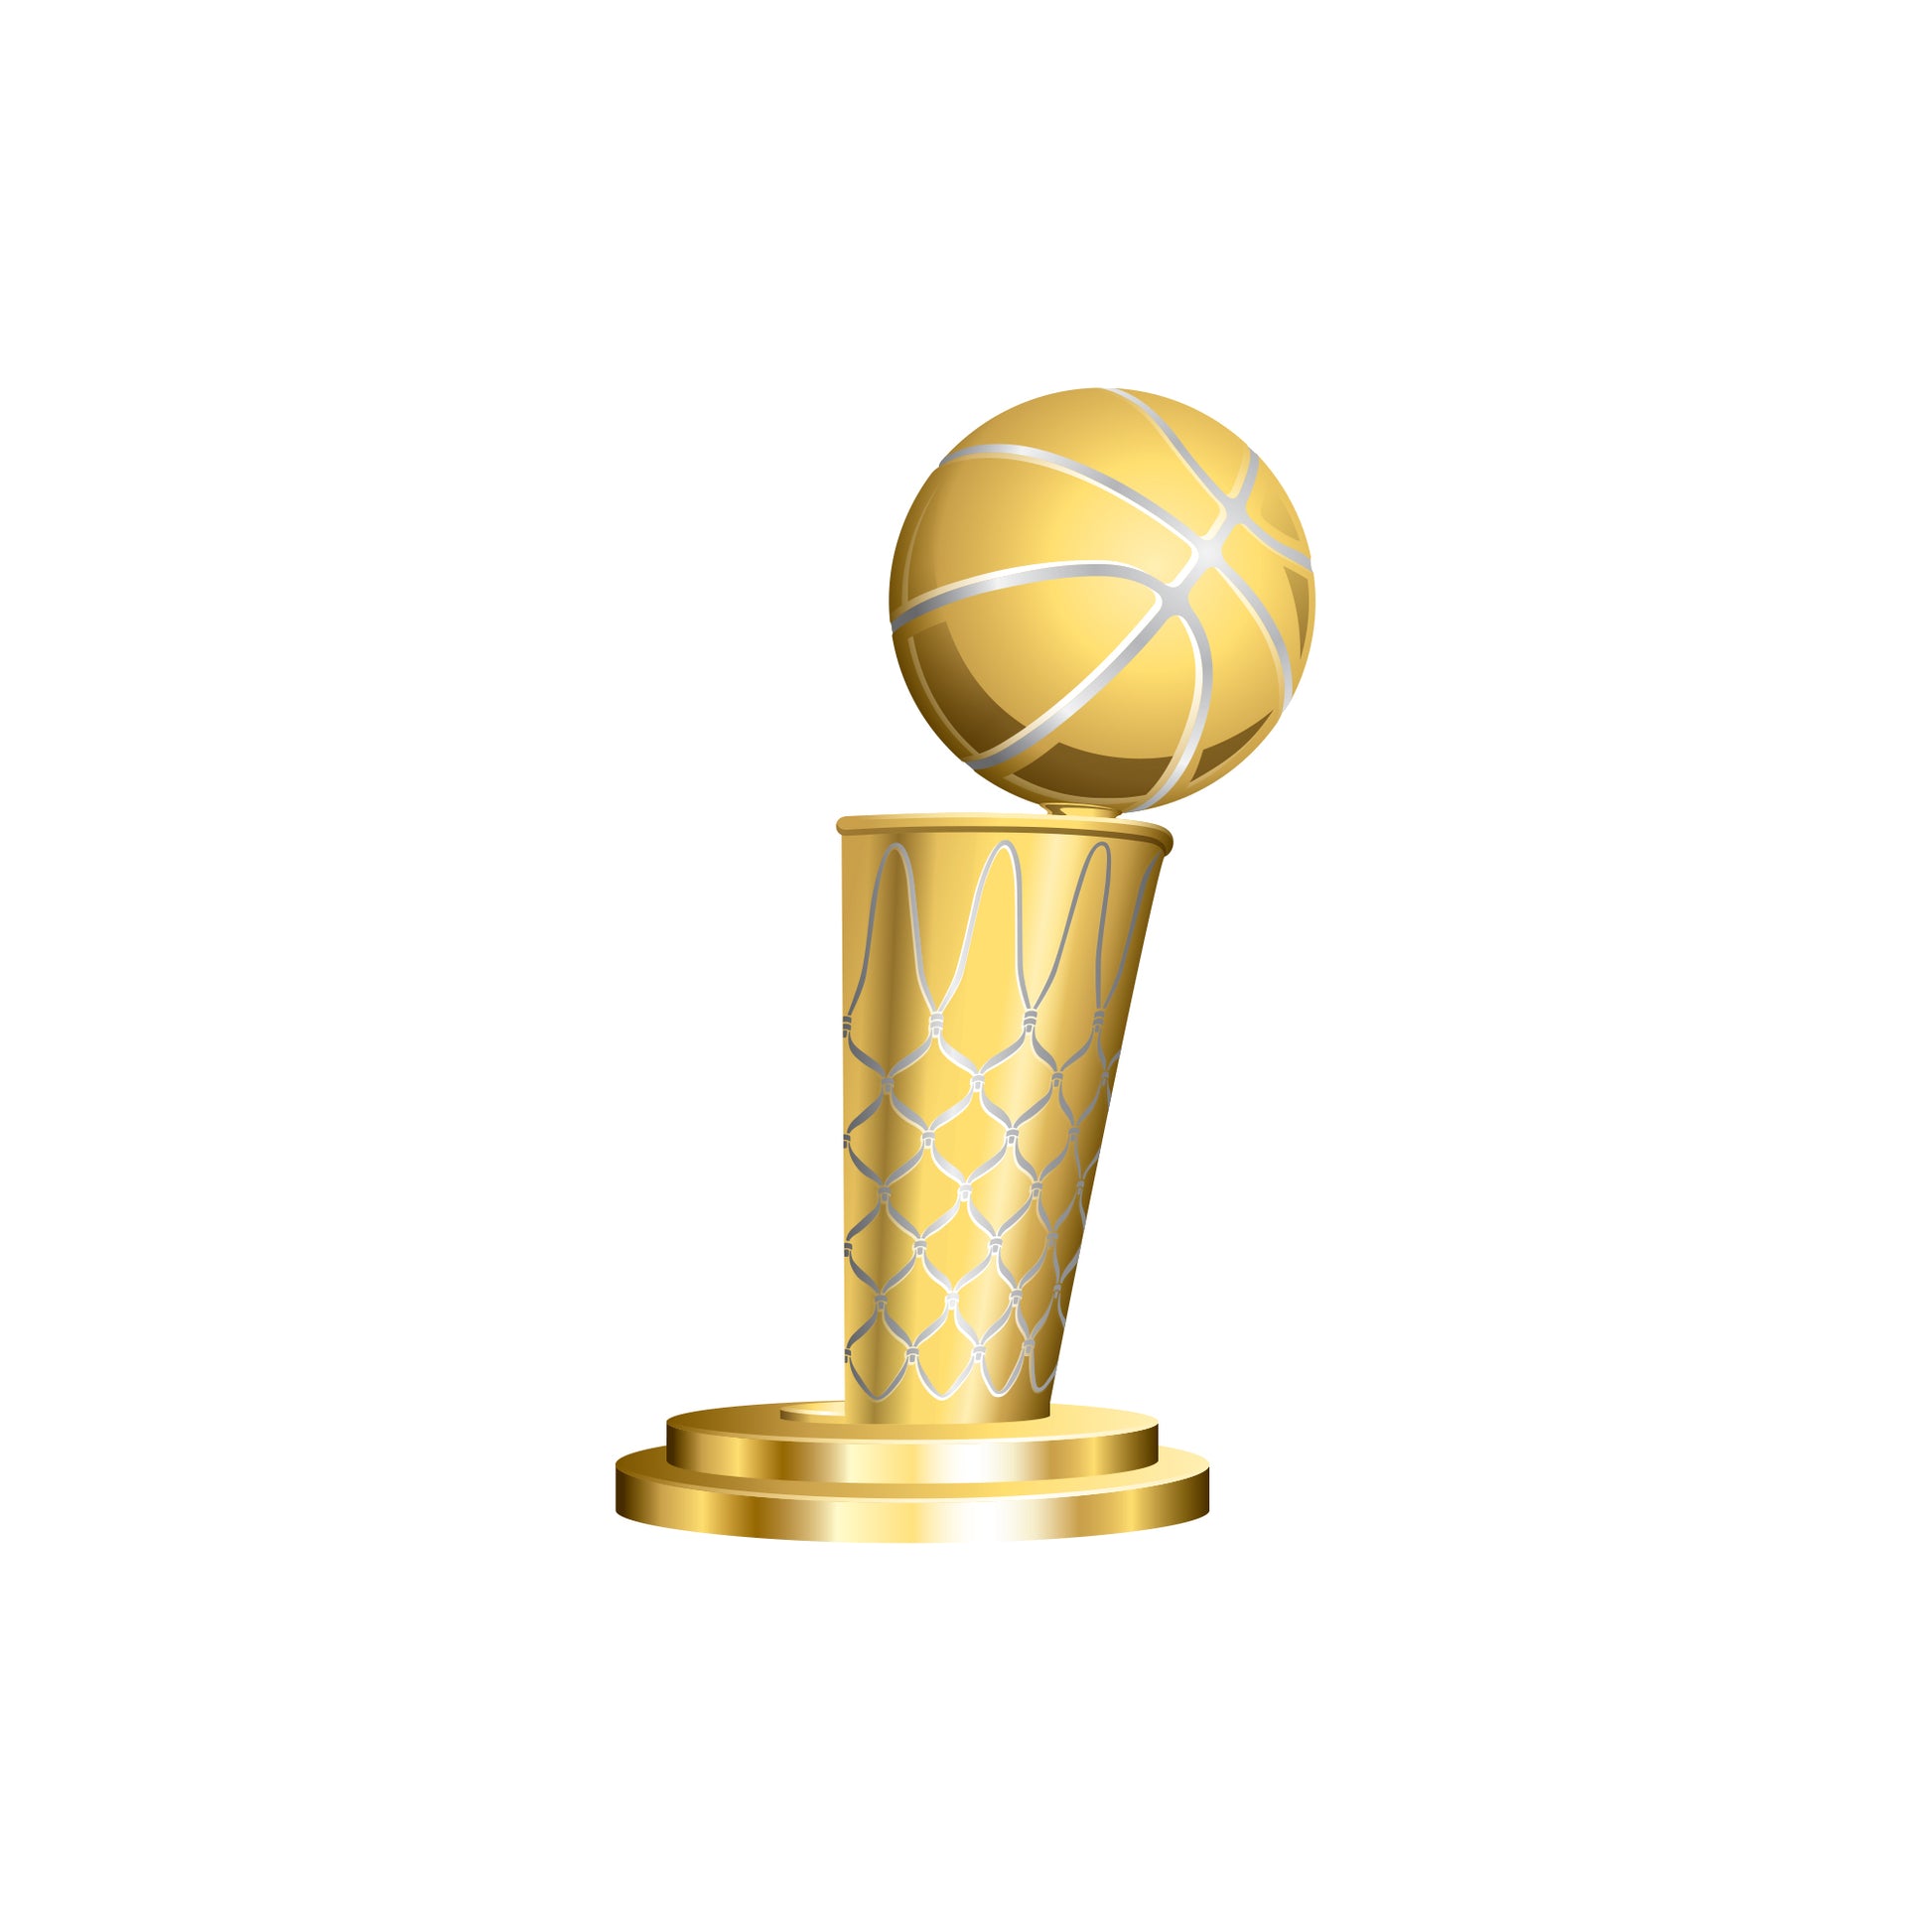 cartoon nba championship trophy